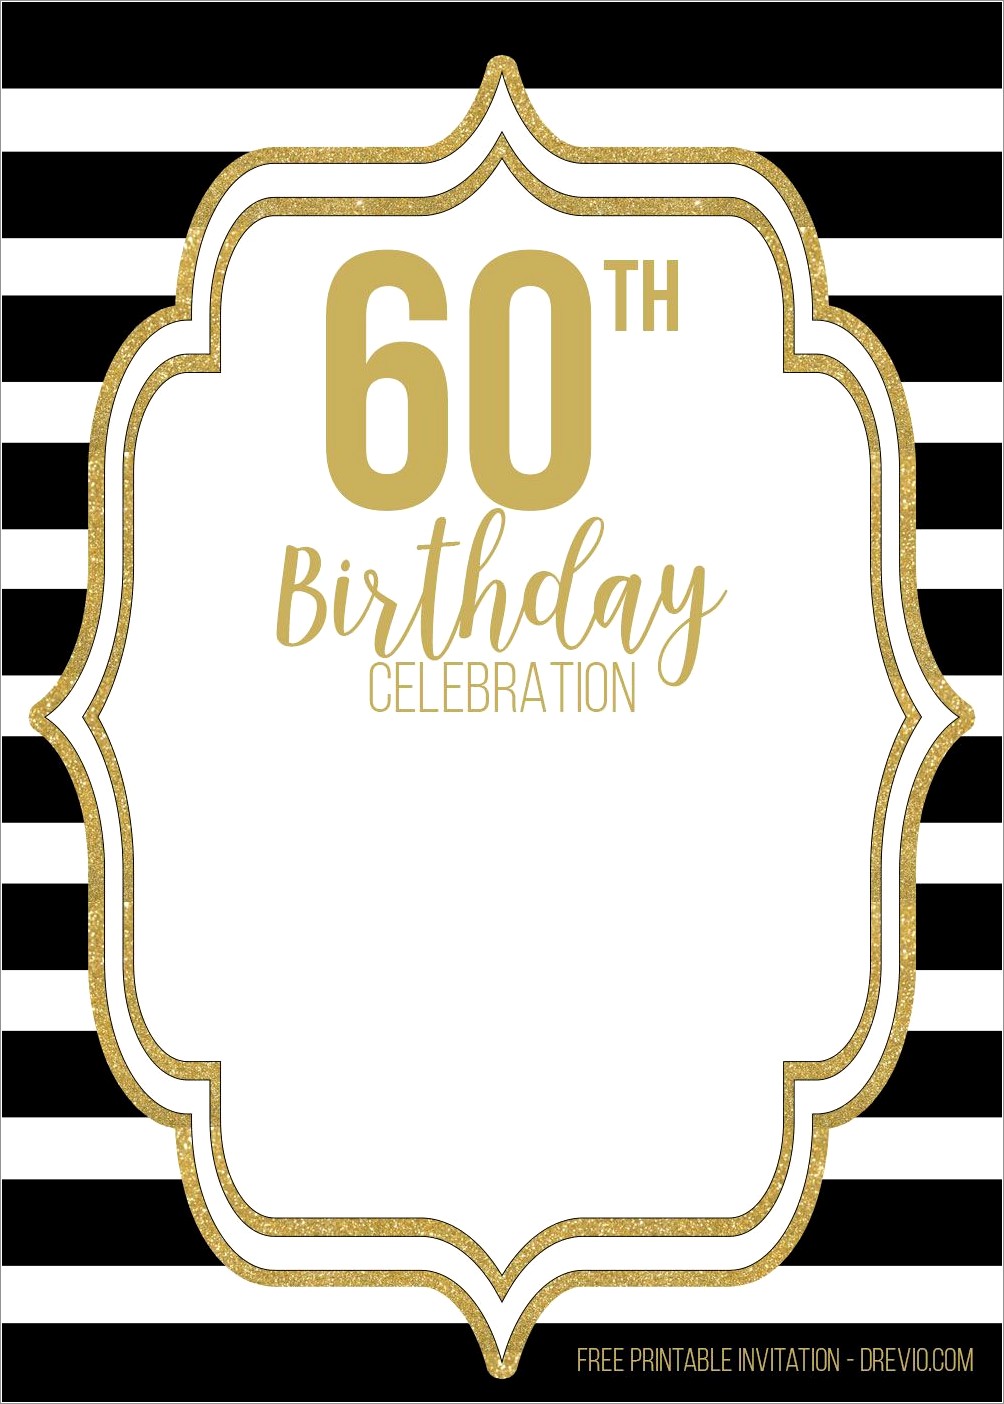 60th-birthday-invitation-templates-microsoft-word-templates-restiumani-resume-m7pyrbwyb4